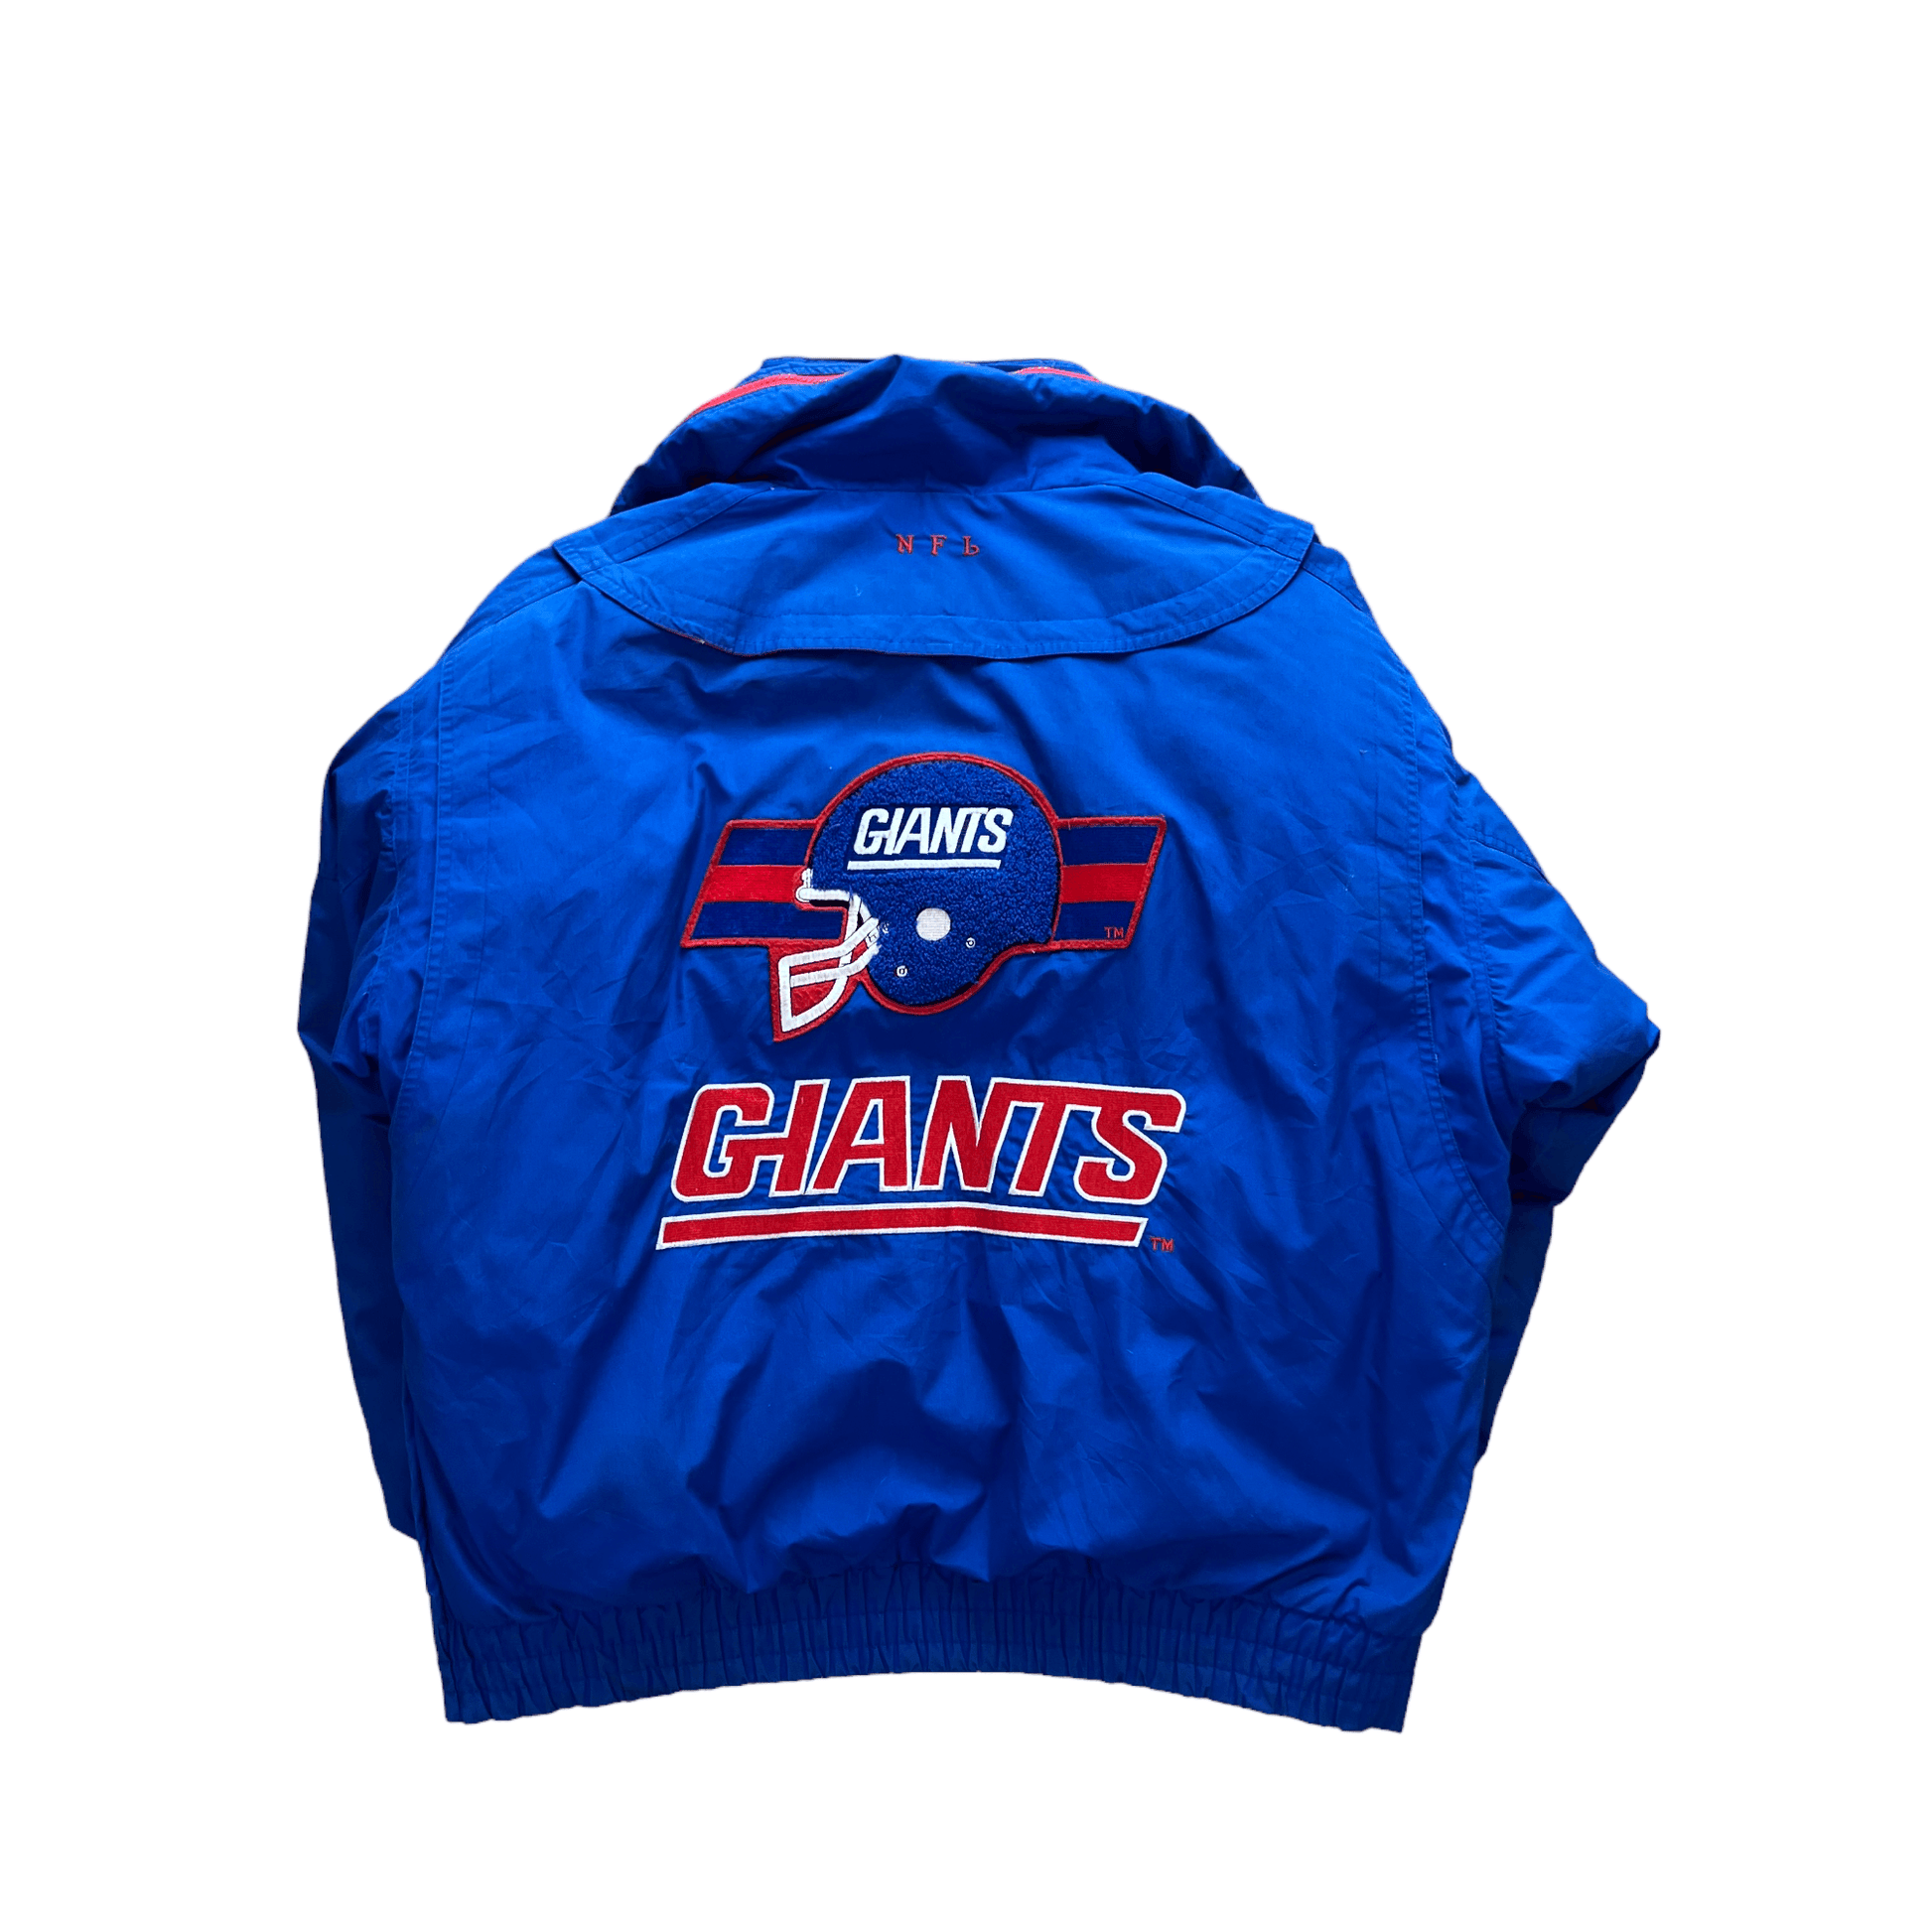 Vintage 90s Navy Blue NFL Giants Puffer Coat - Large - The Streetwear Studio